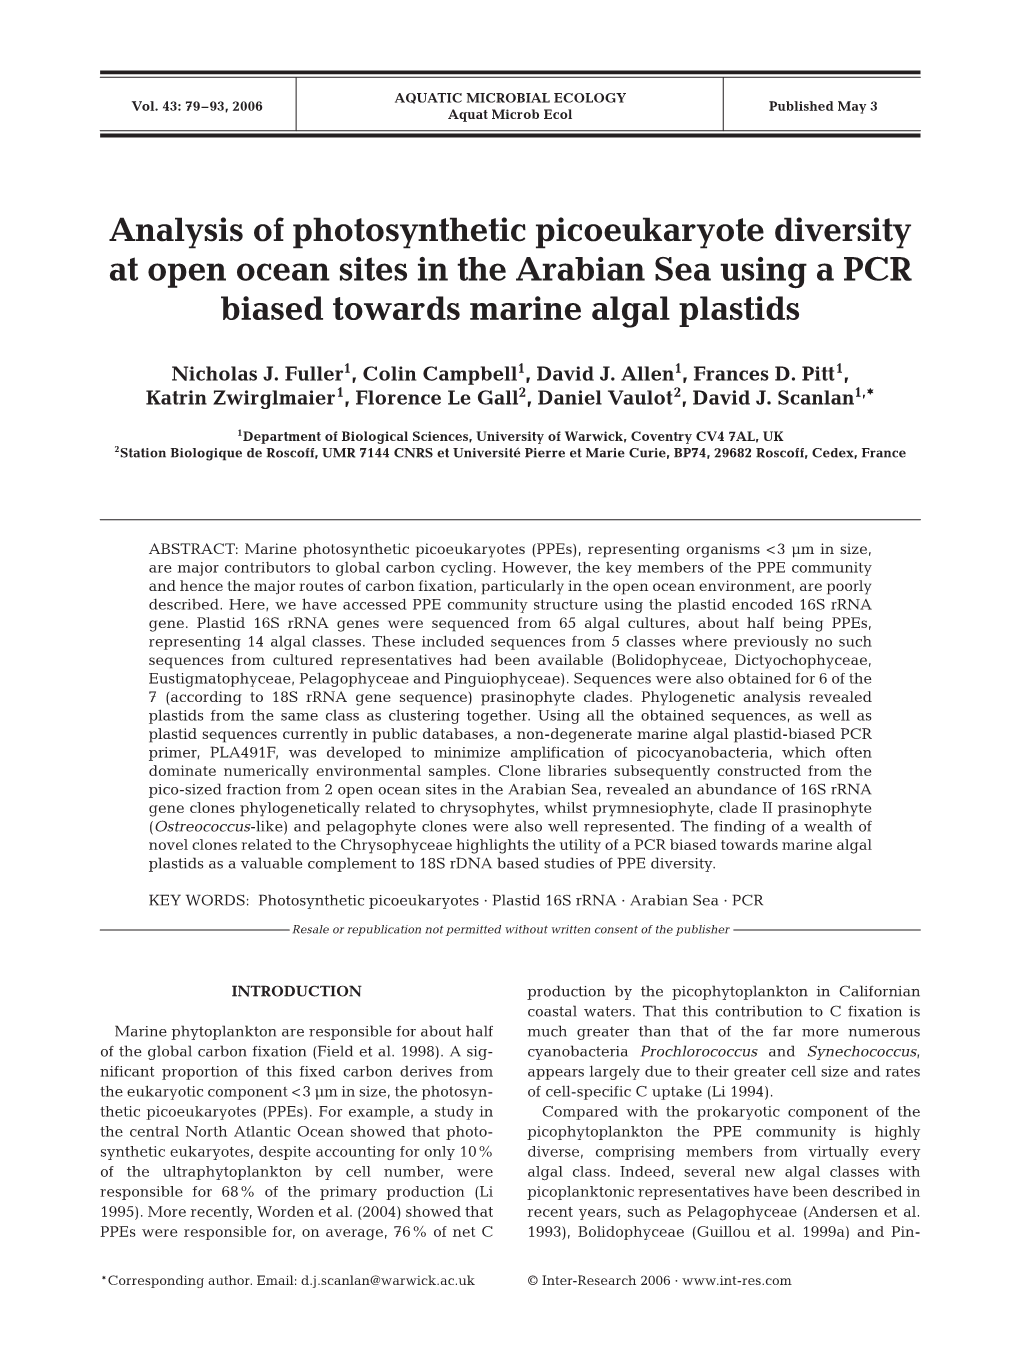 Analysis of Photosynthetic Picoeukaryote Diversity at Open Ocean Sites in the Arabian Sea Using a PCR Biased Towards Marine Algal Plastids